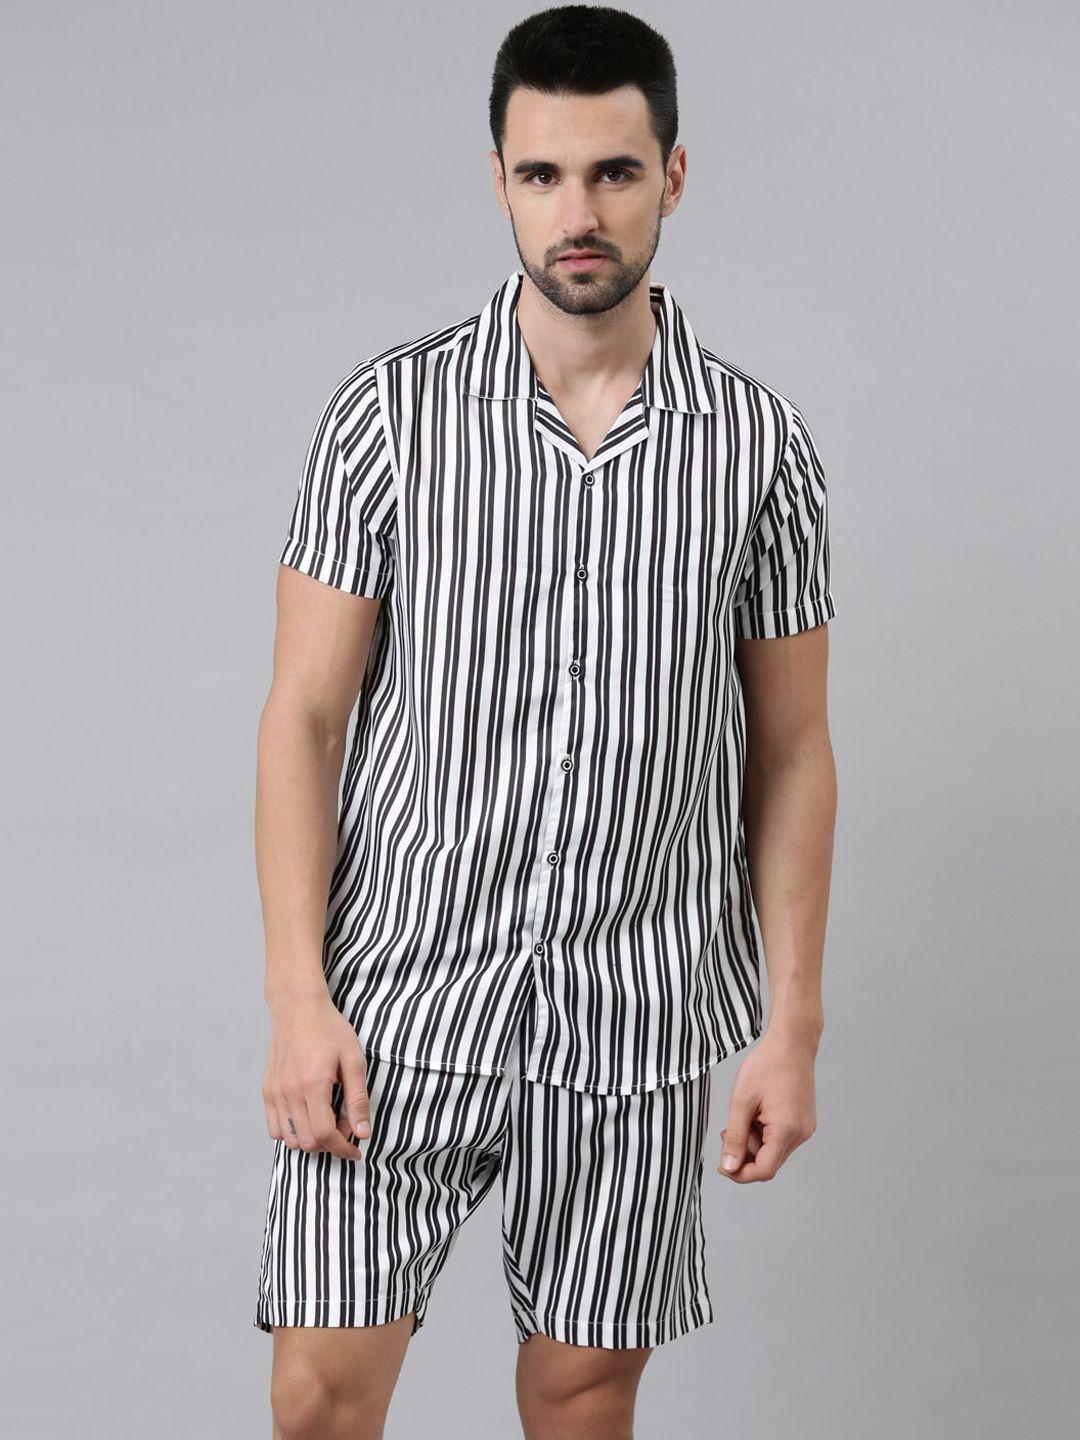 bushirt men black & white striped night suit